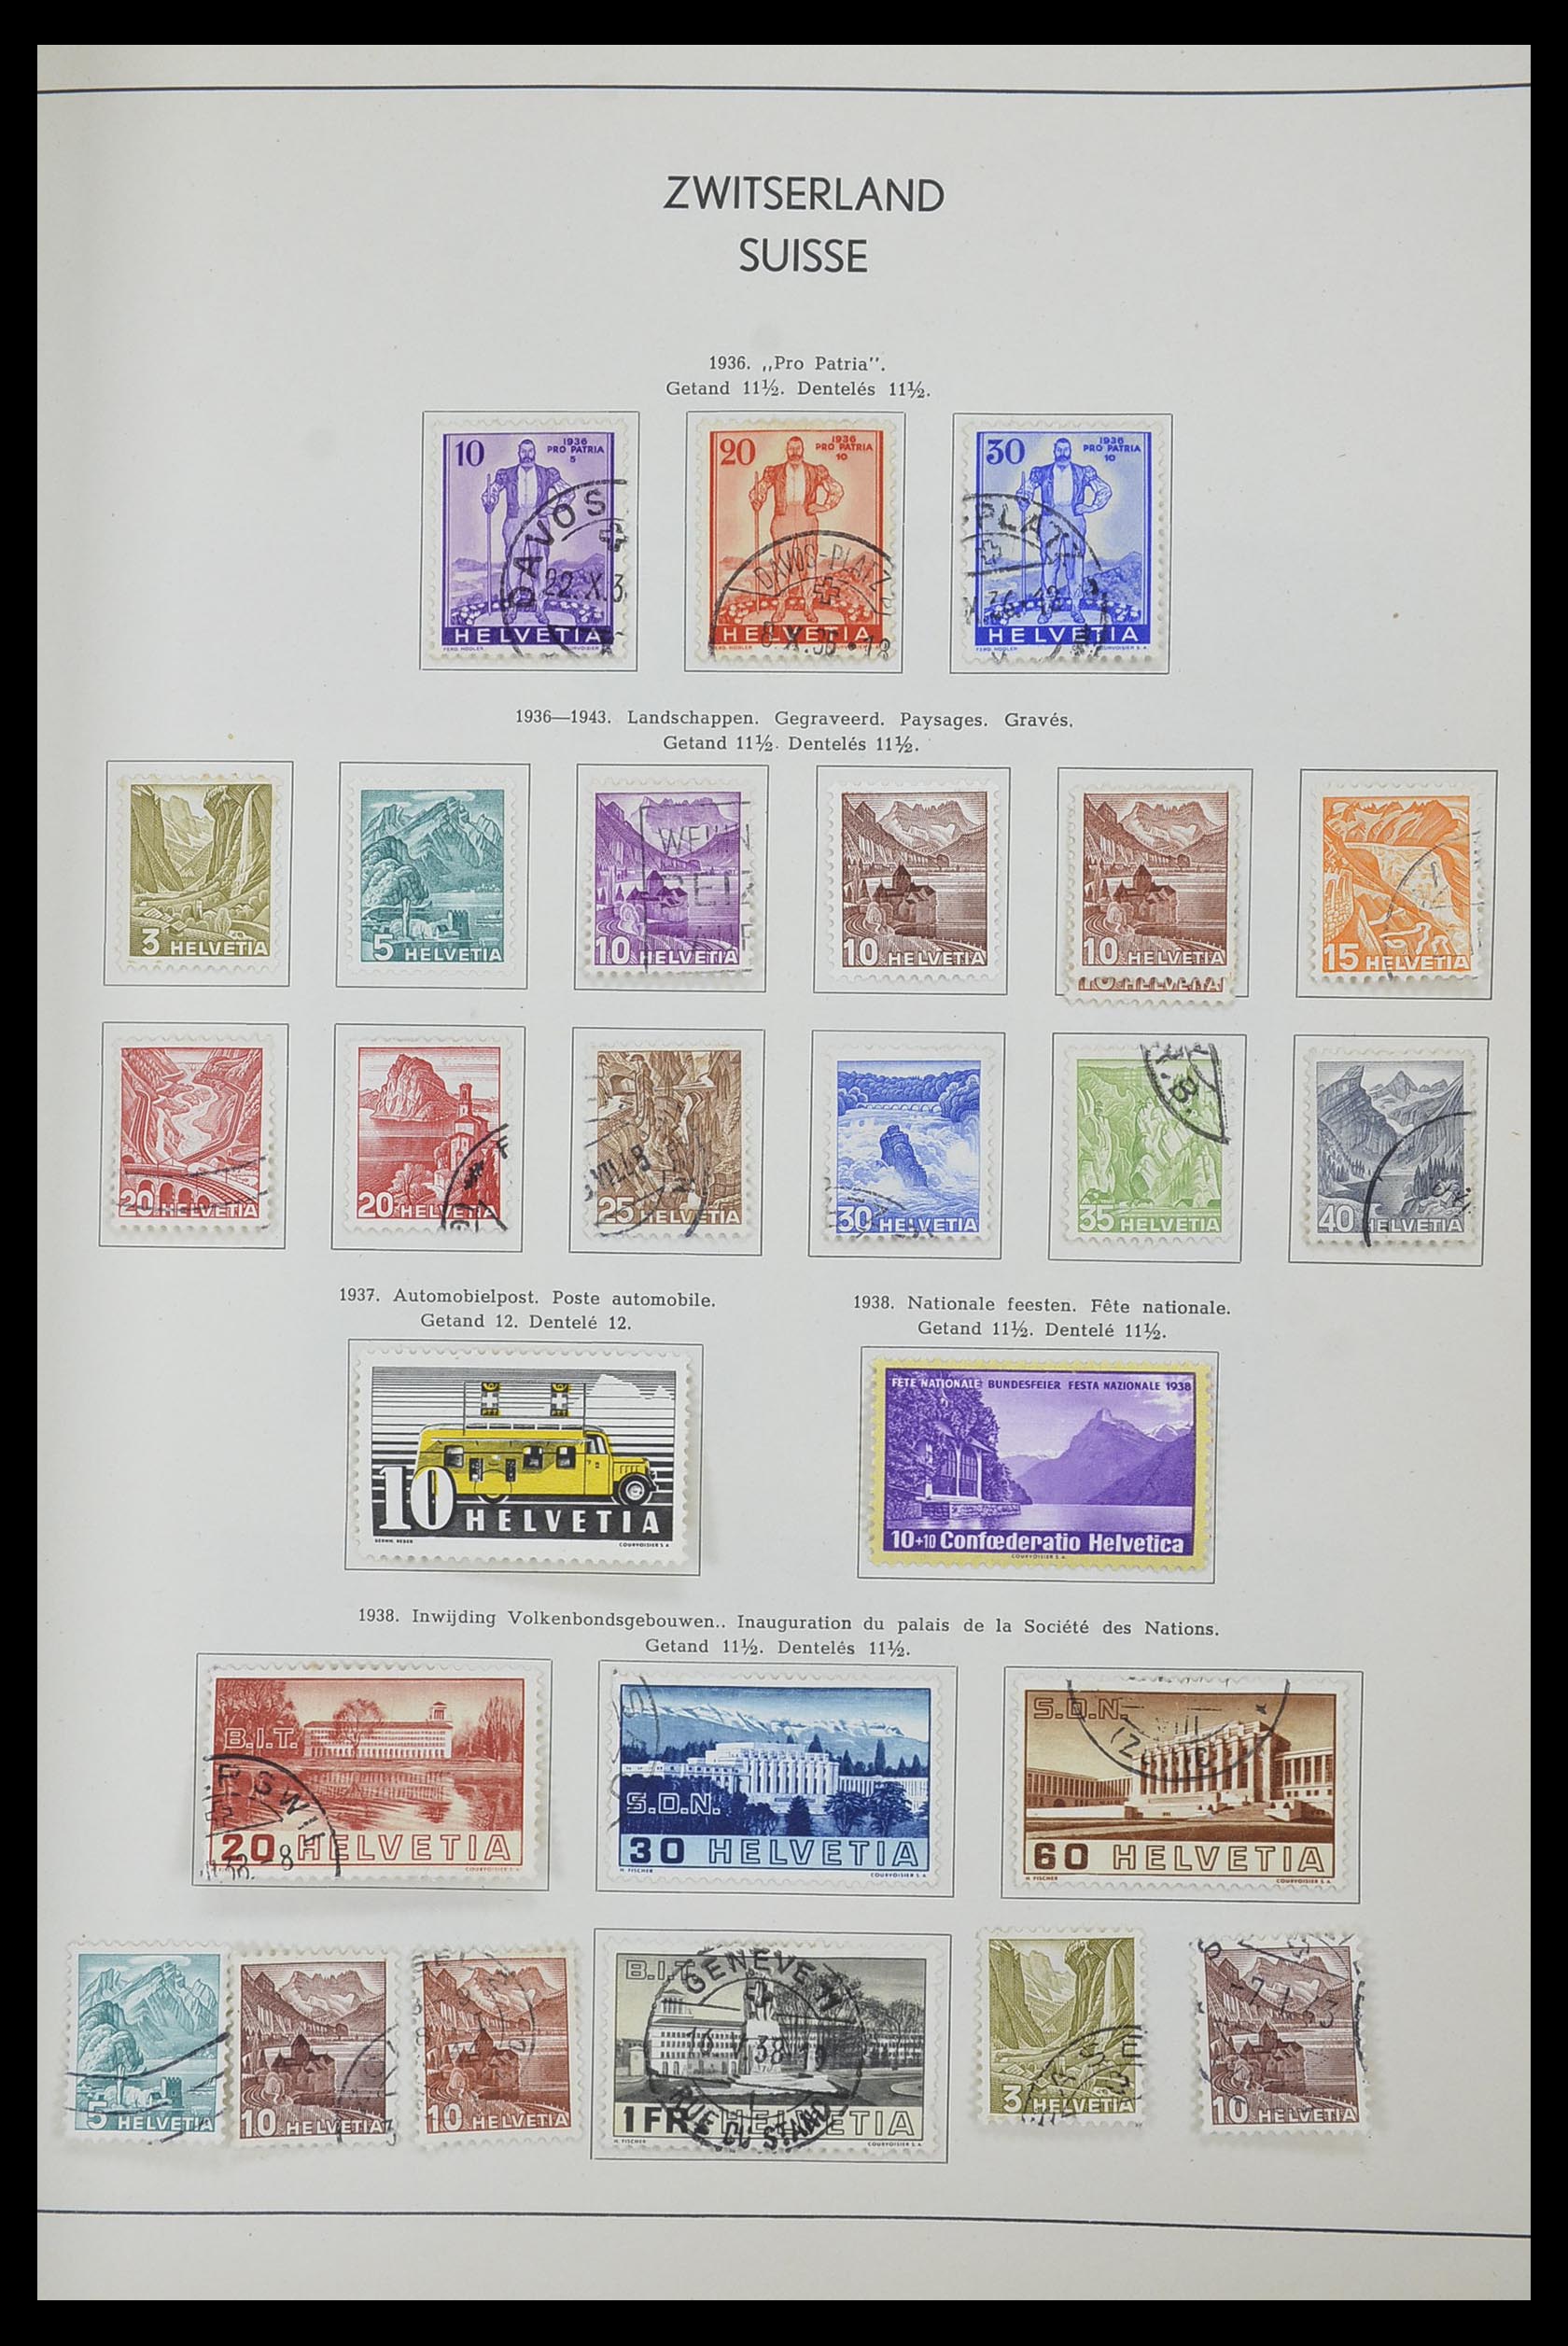 33601 015 - Stamp collection 33601 Switzerland 1854-1985.